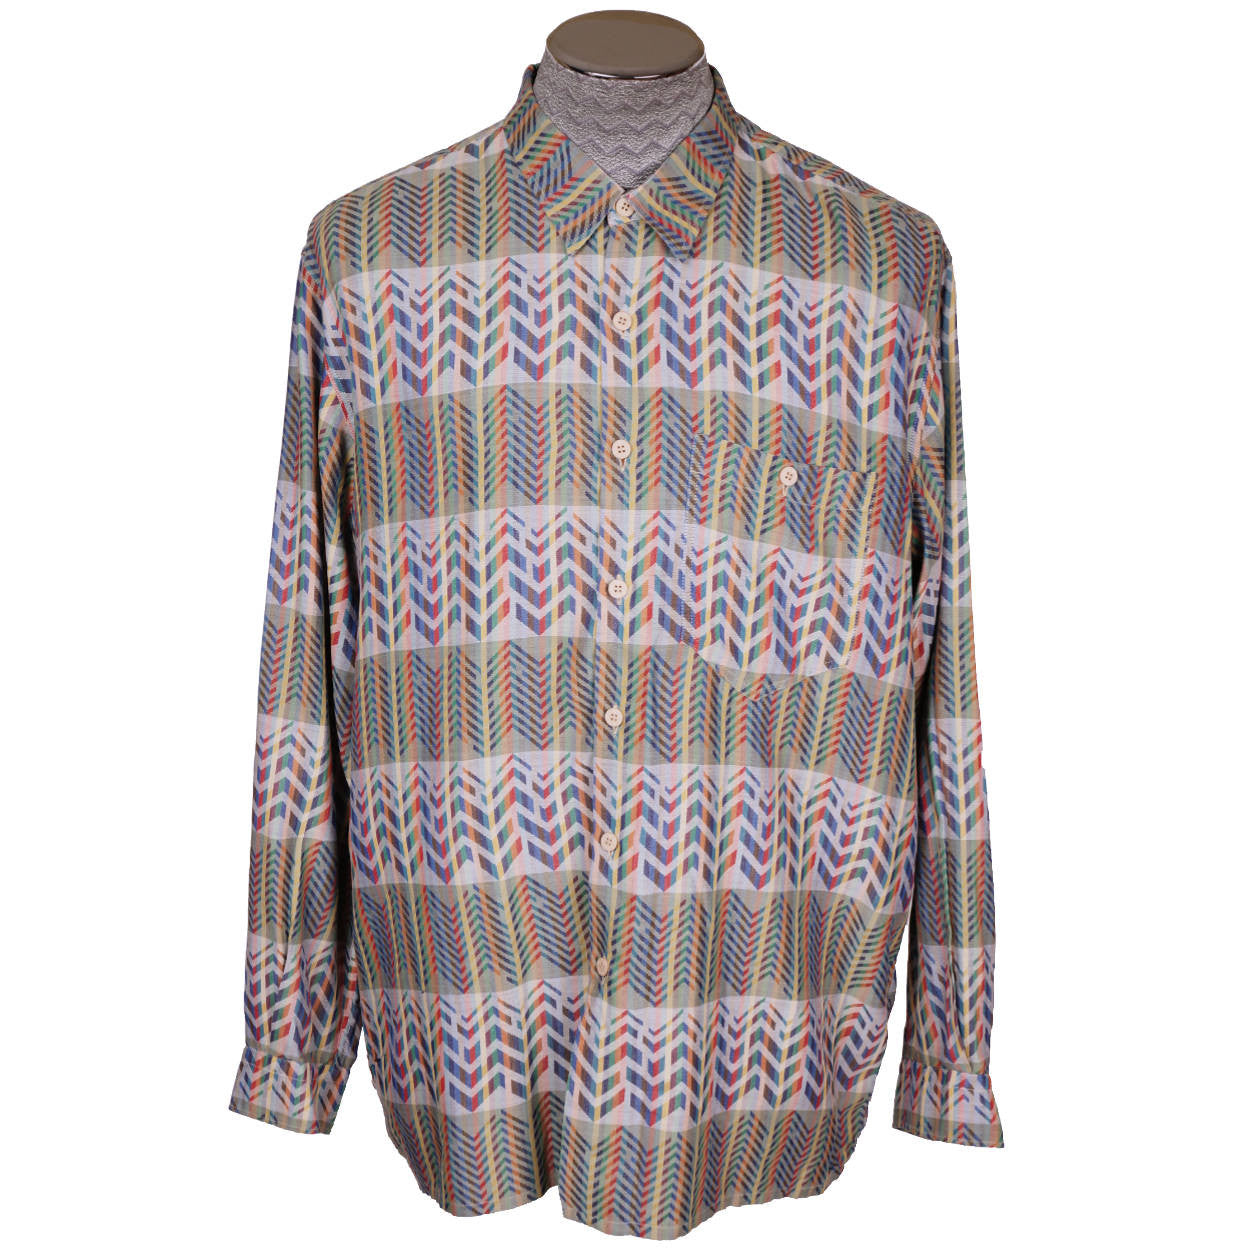 WARDROBE.NYC Classic Short-Sleeve T-Shirt - Bergdorf Goodman